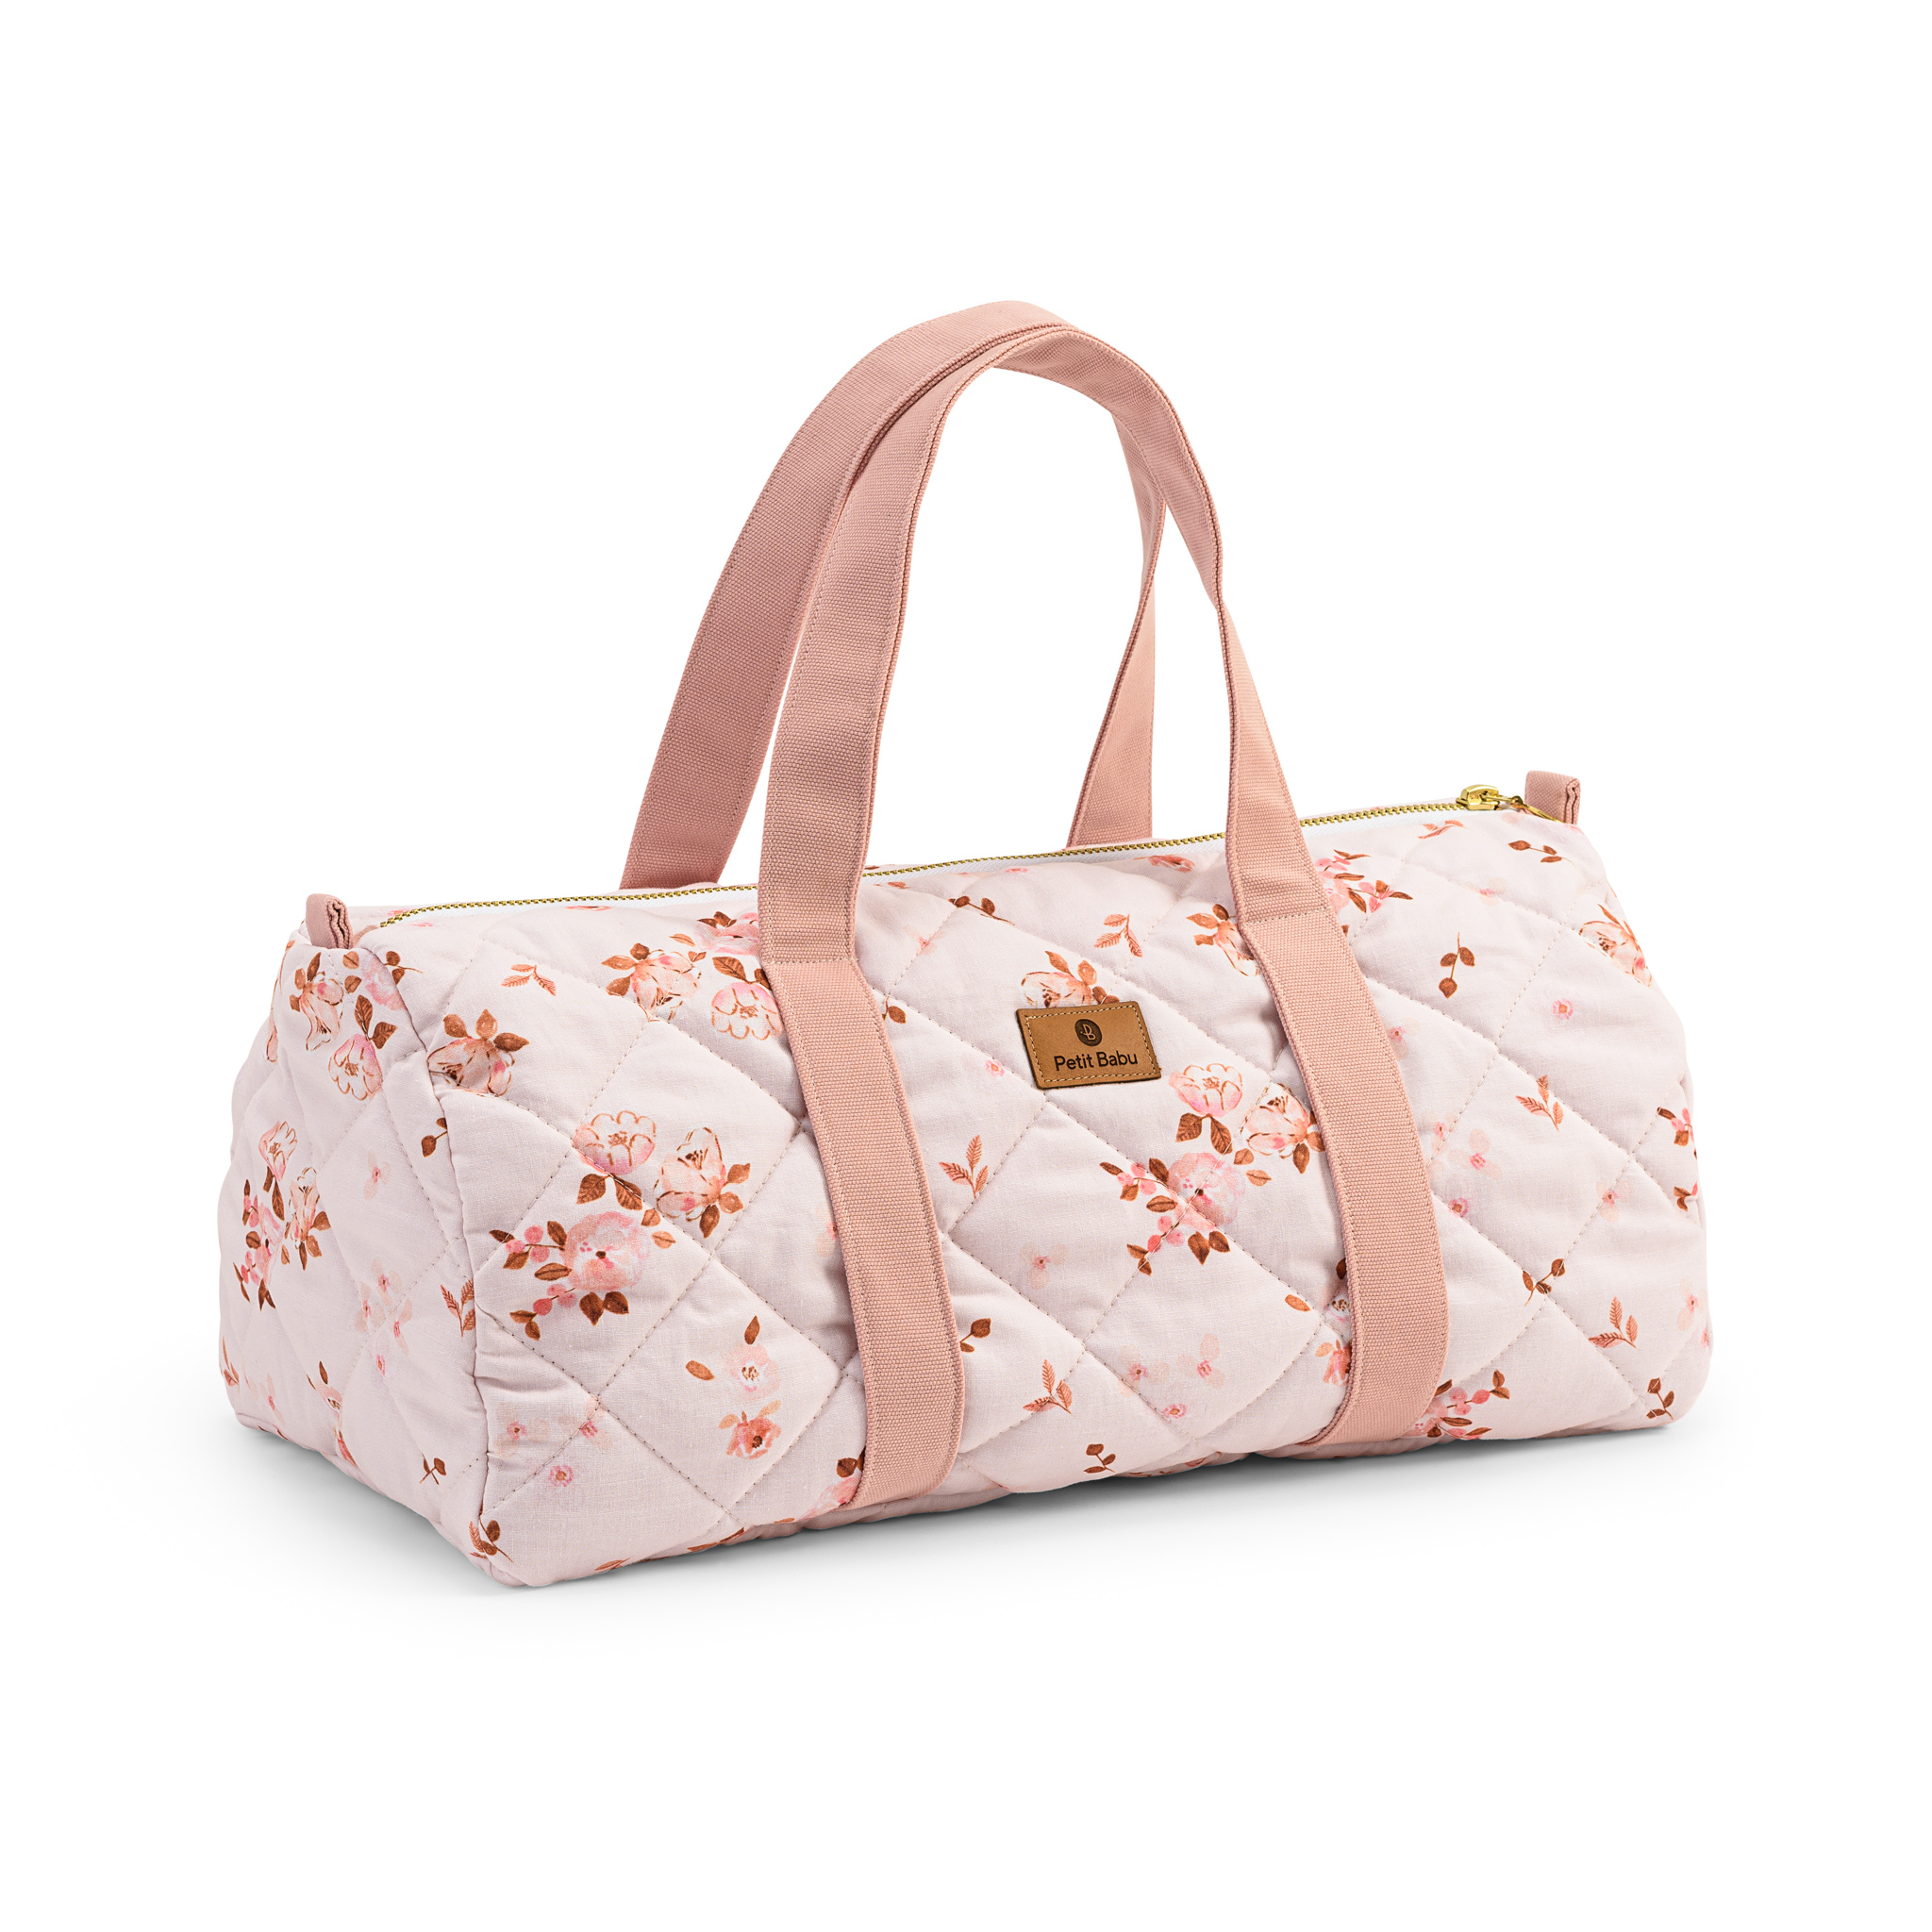 Weekend bag - Apple blossom